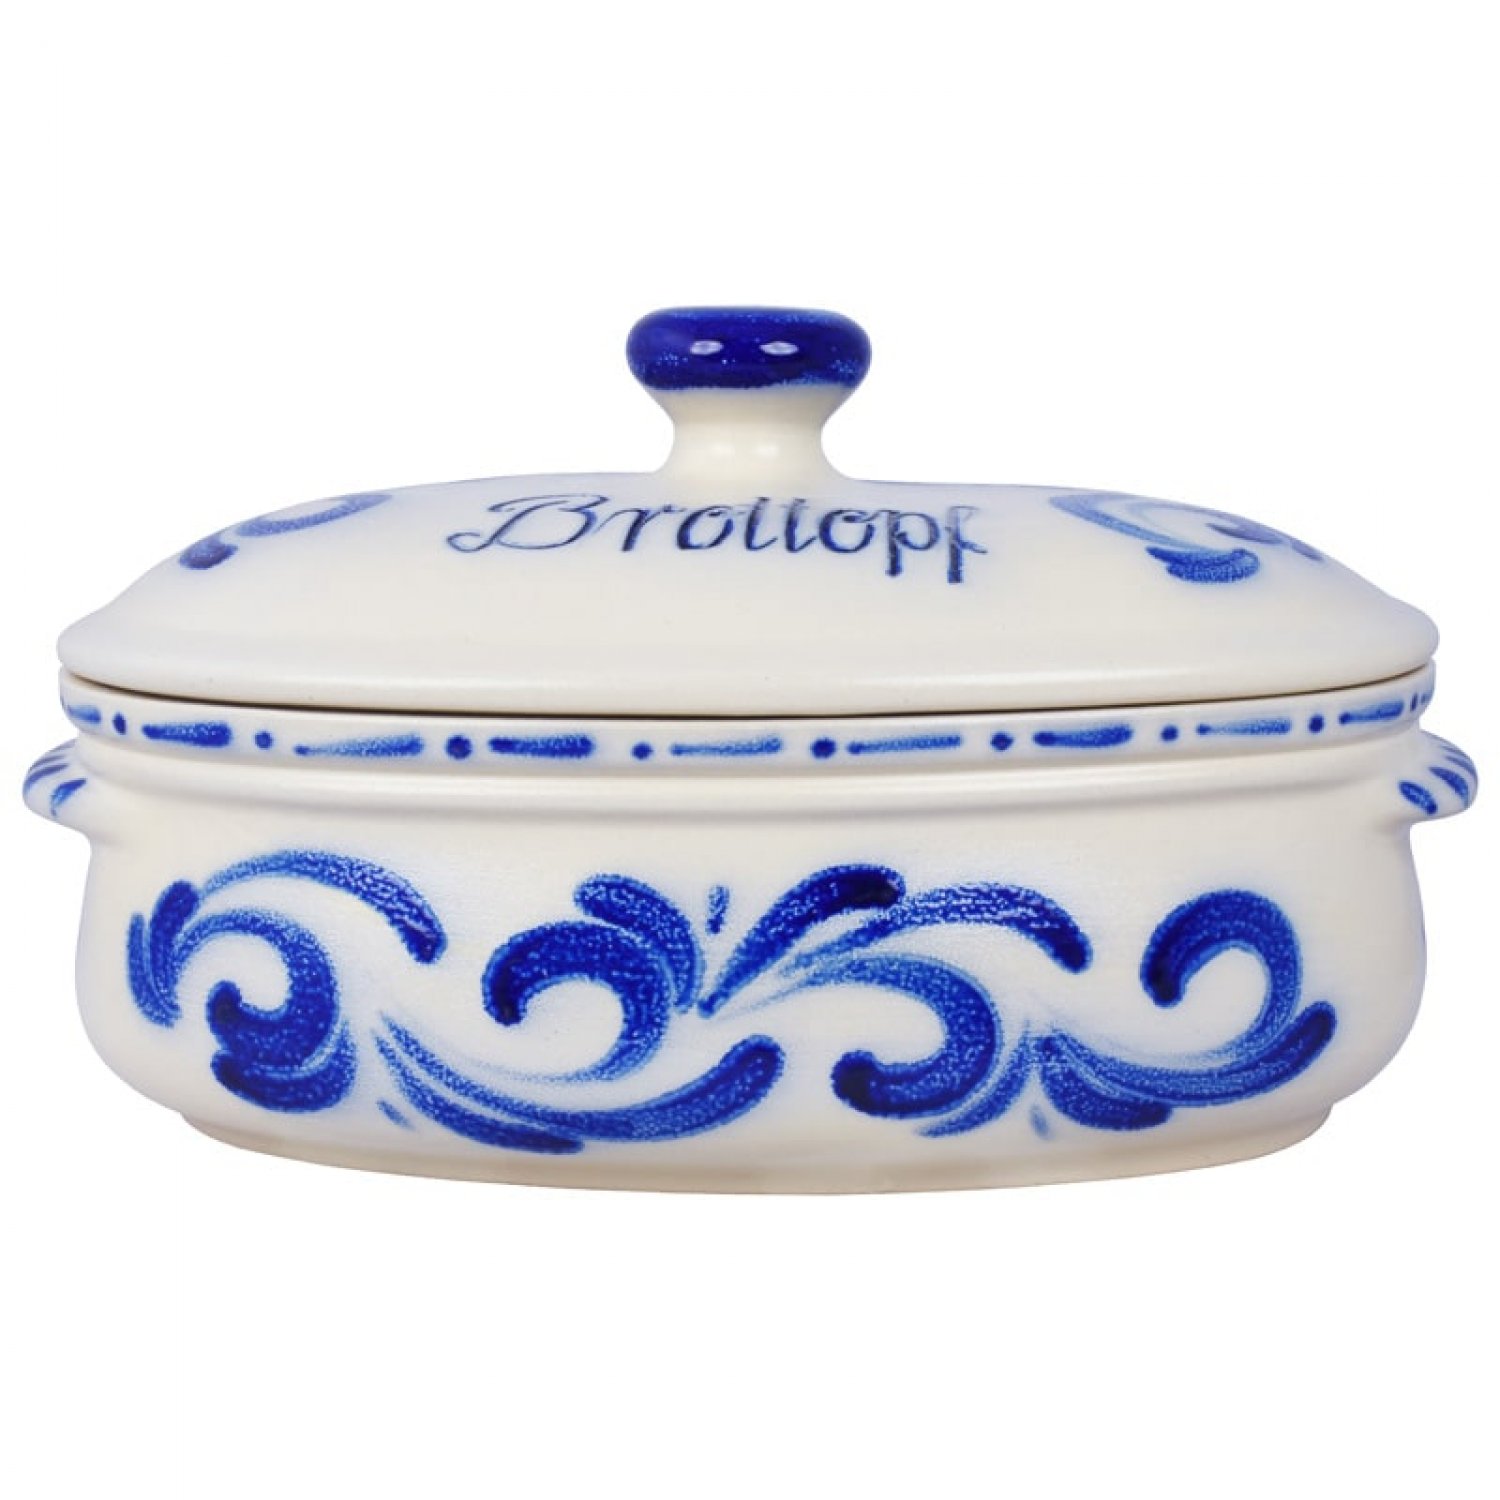 Bild zu Brottopf Keramik oval groß Dekor blau